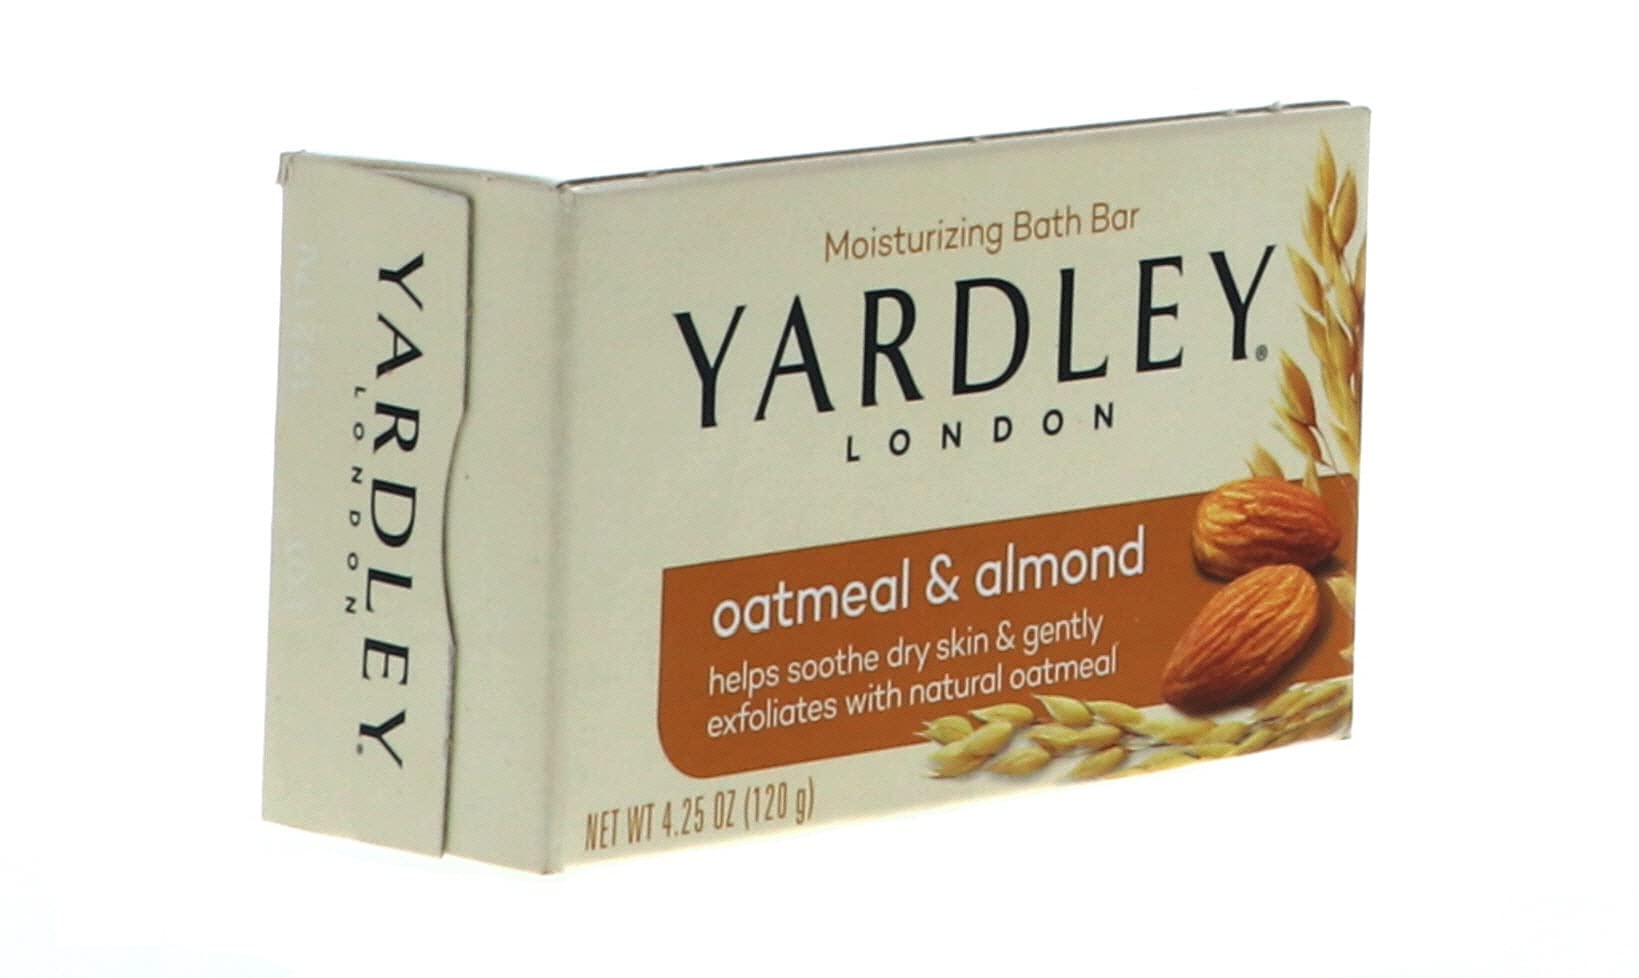 Yardley London Oatmeal and Almond Naturally Moisturizing Bath Bar, 4.0 Oz., 2 Count